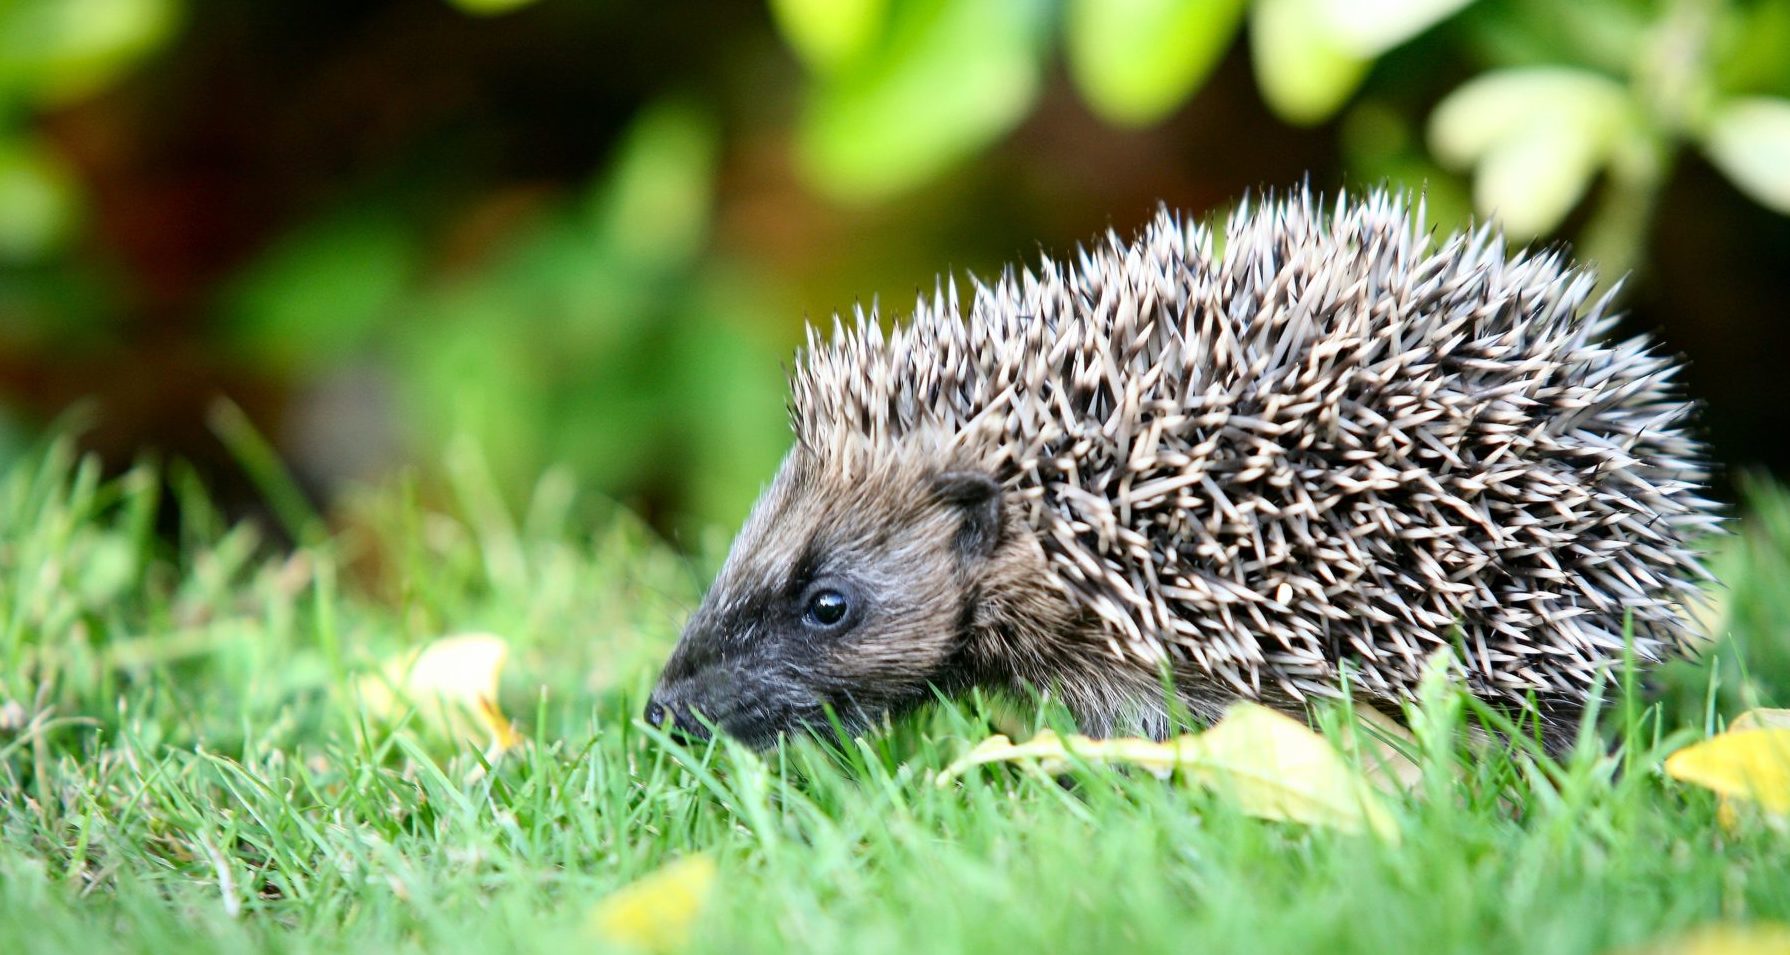 Hedgehog by Stephen Heliczer